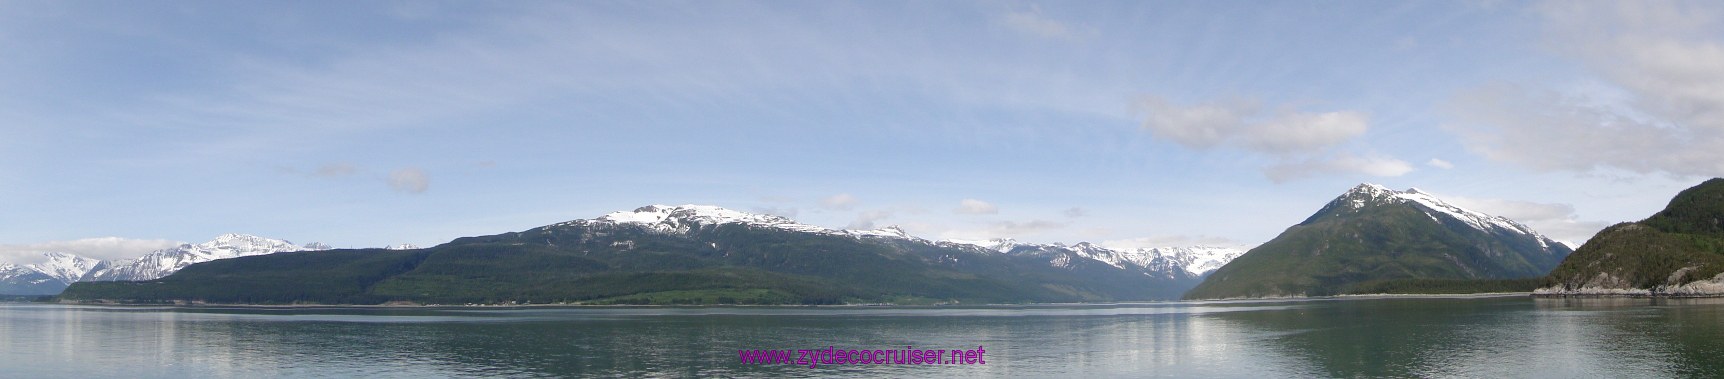 022: Carnival Spirit, Skagway, Alaska - Eagle Preserve Wildlife River Adventure - Panorama